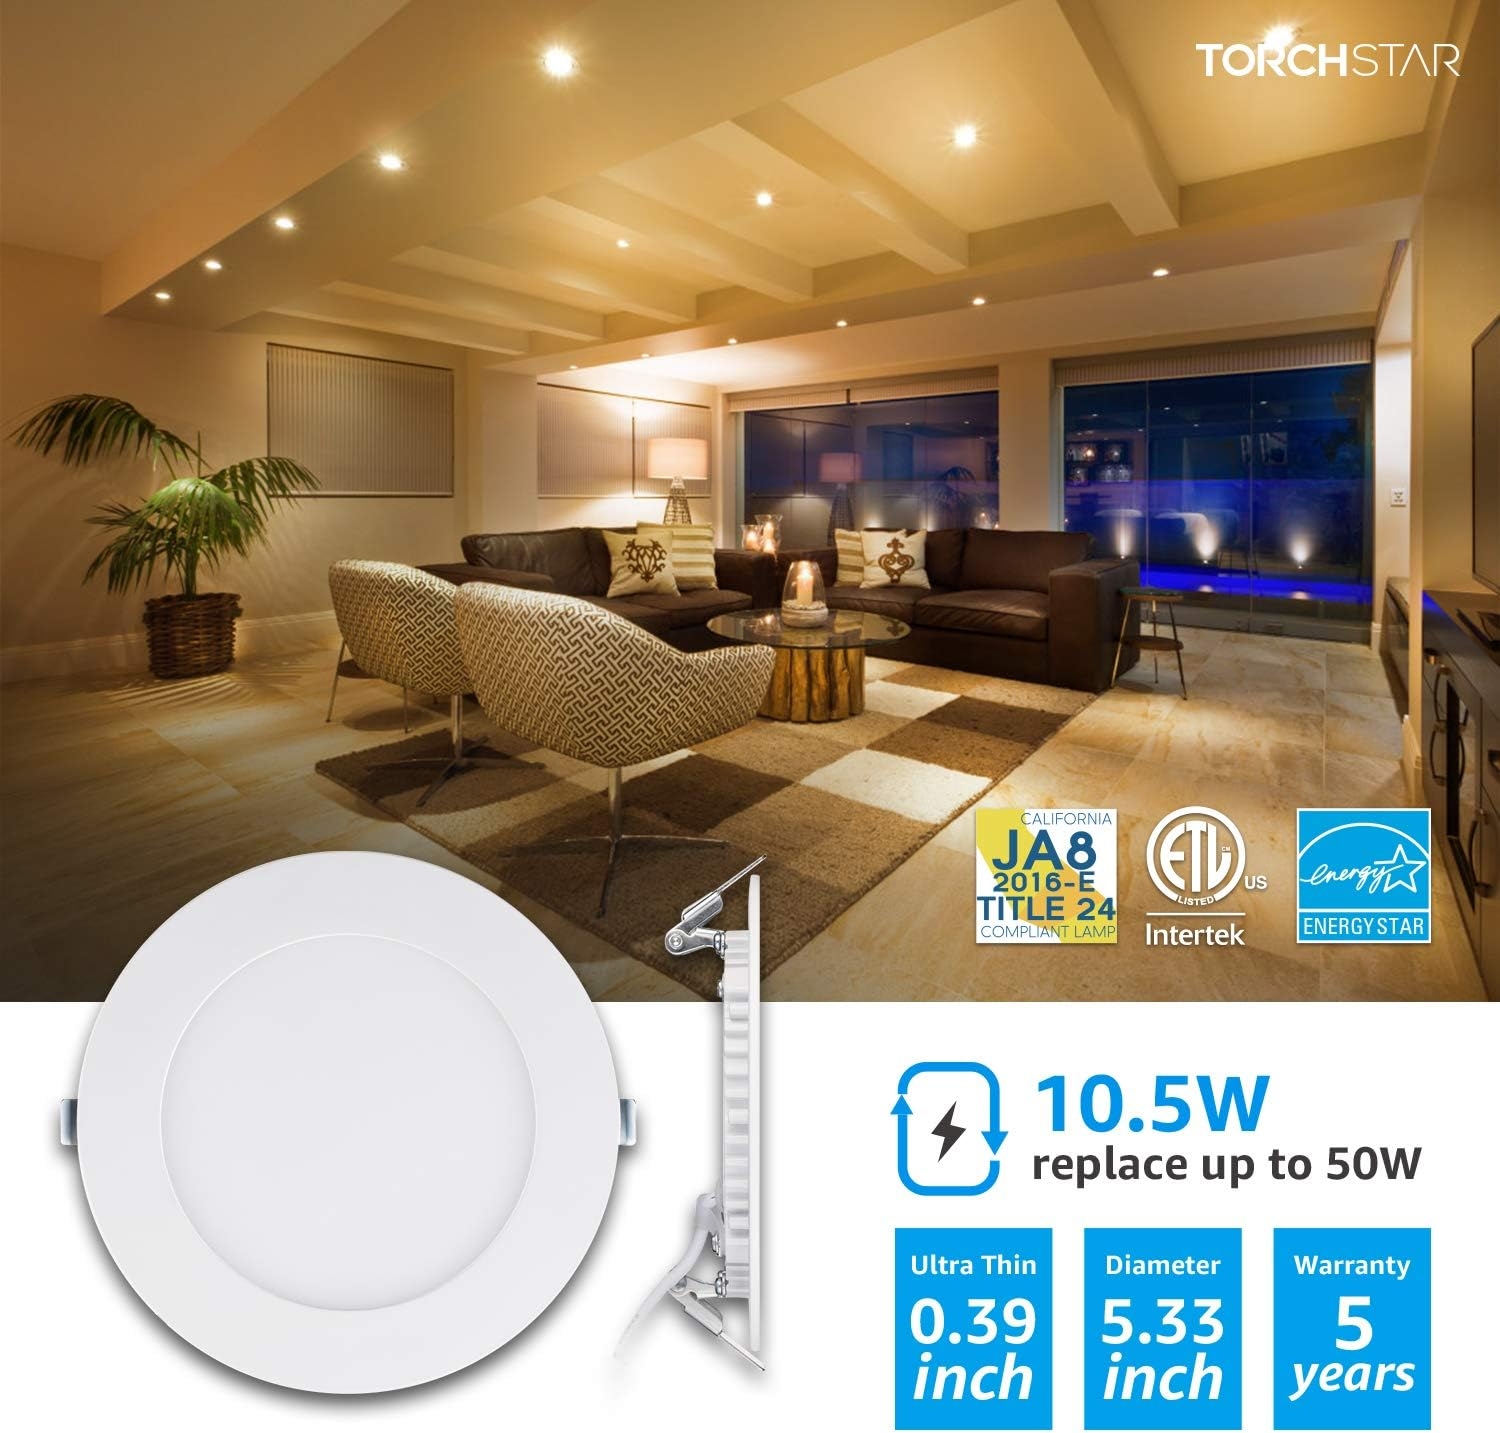 TORCHSTAR 10.5W 4-Inch Slim LED Recessed Light with J-Box, 2700K Soft White Dimmable Panel Downlight, CRI90, 680lm, ETL & Energy Star, White, Pack of 6